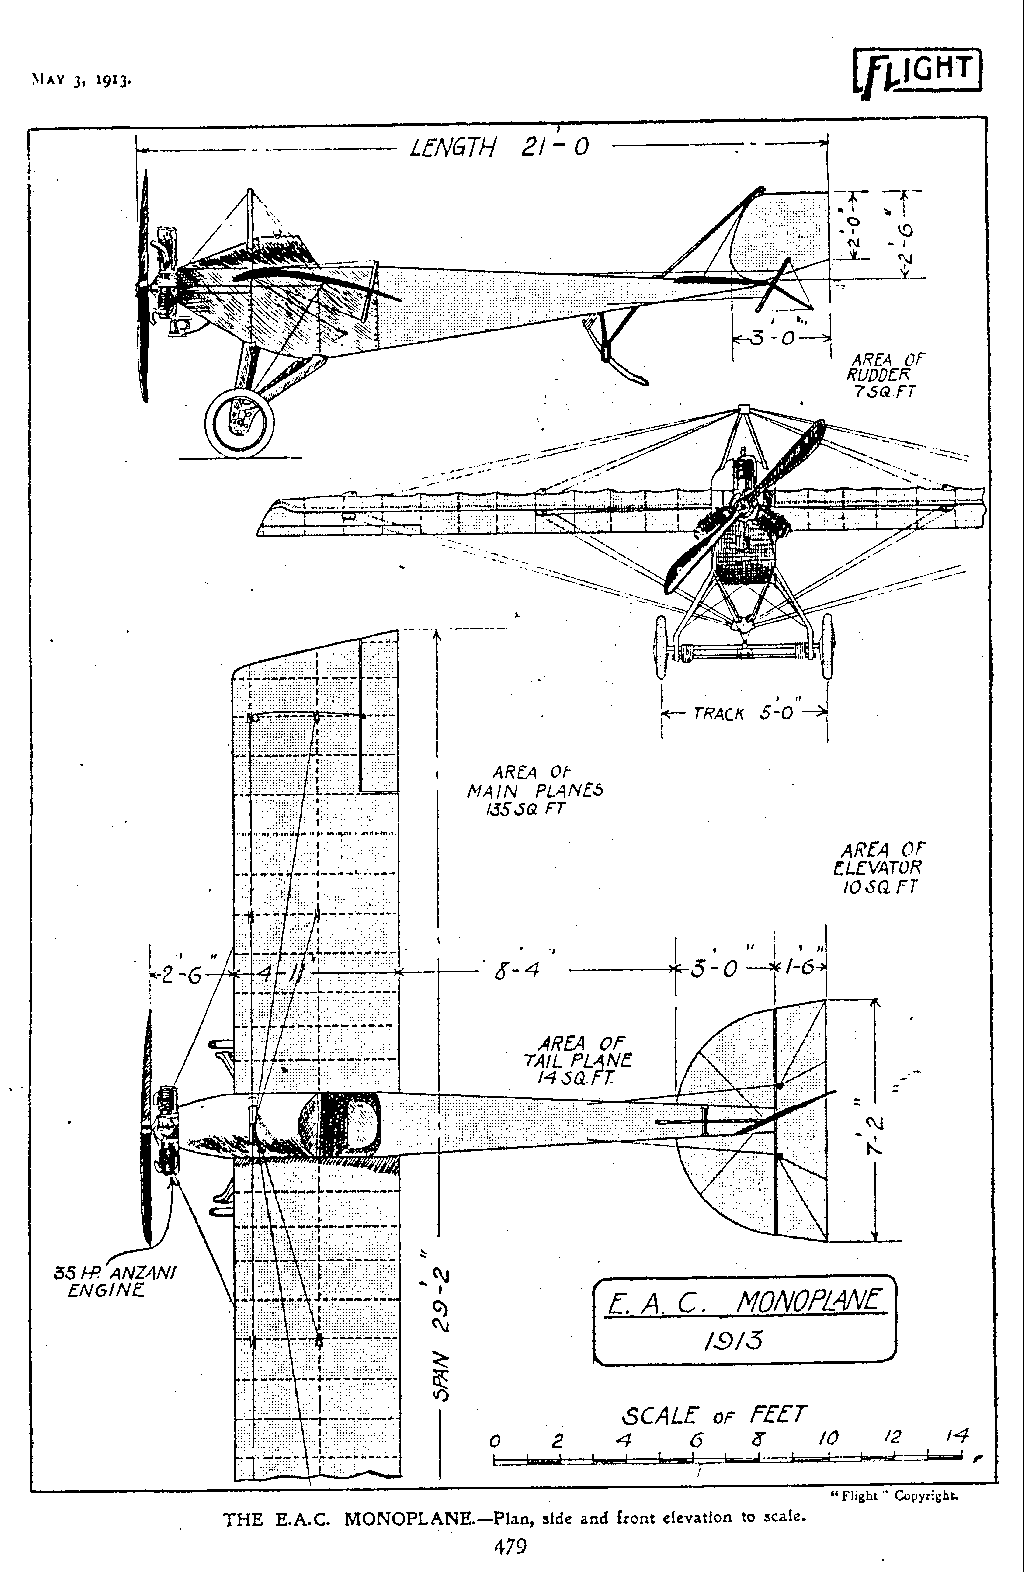 THE E.A.C MONOPLANE 1913